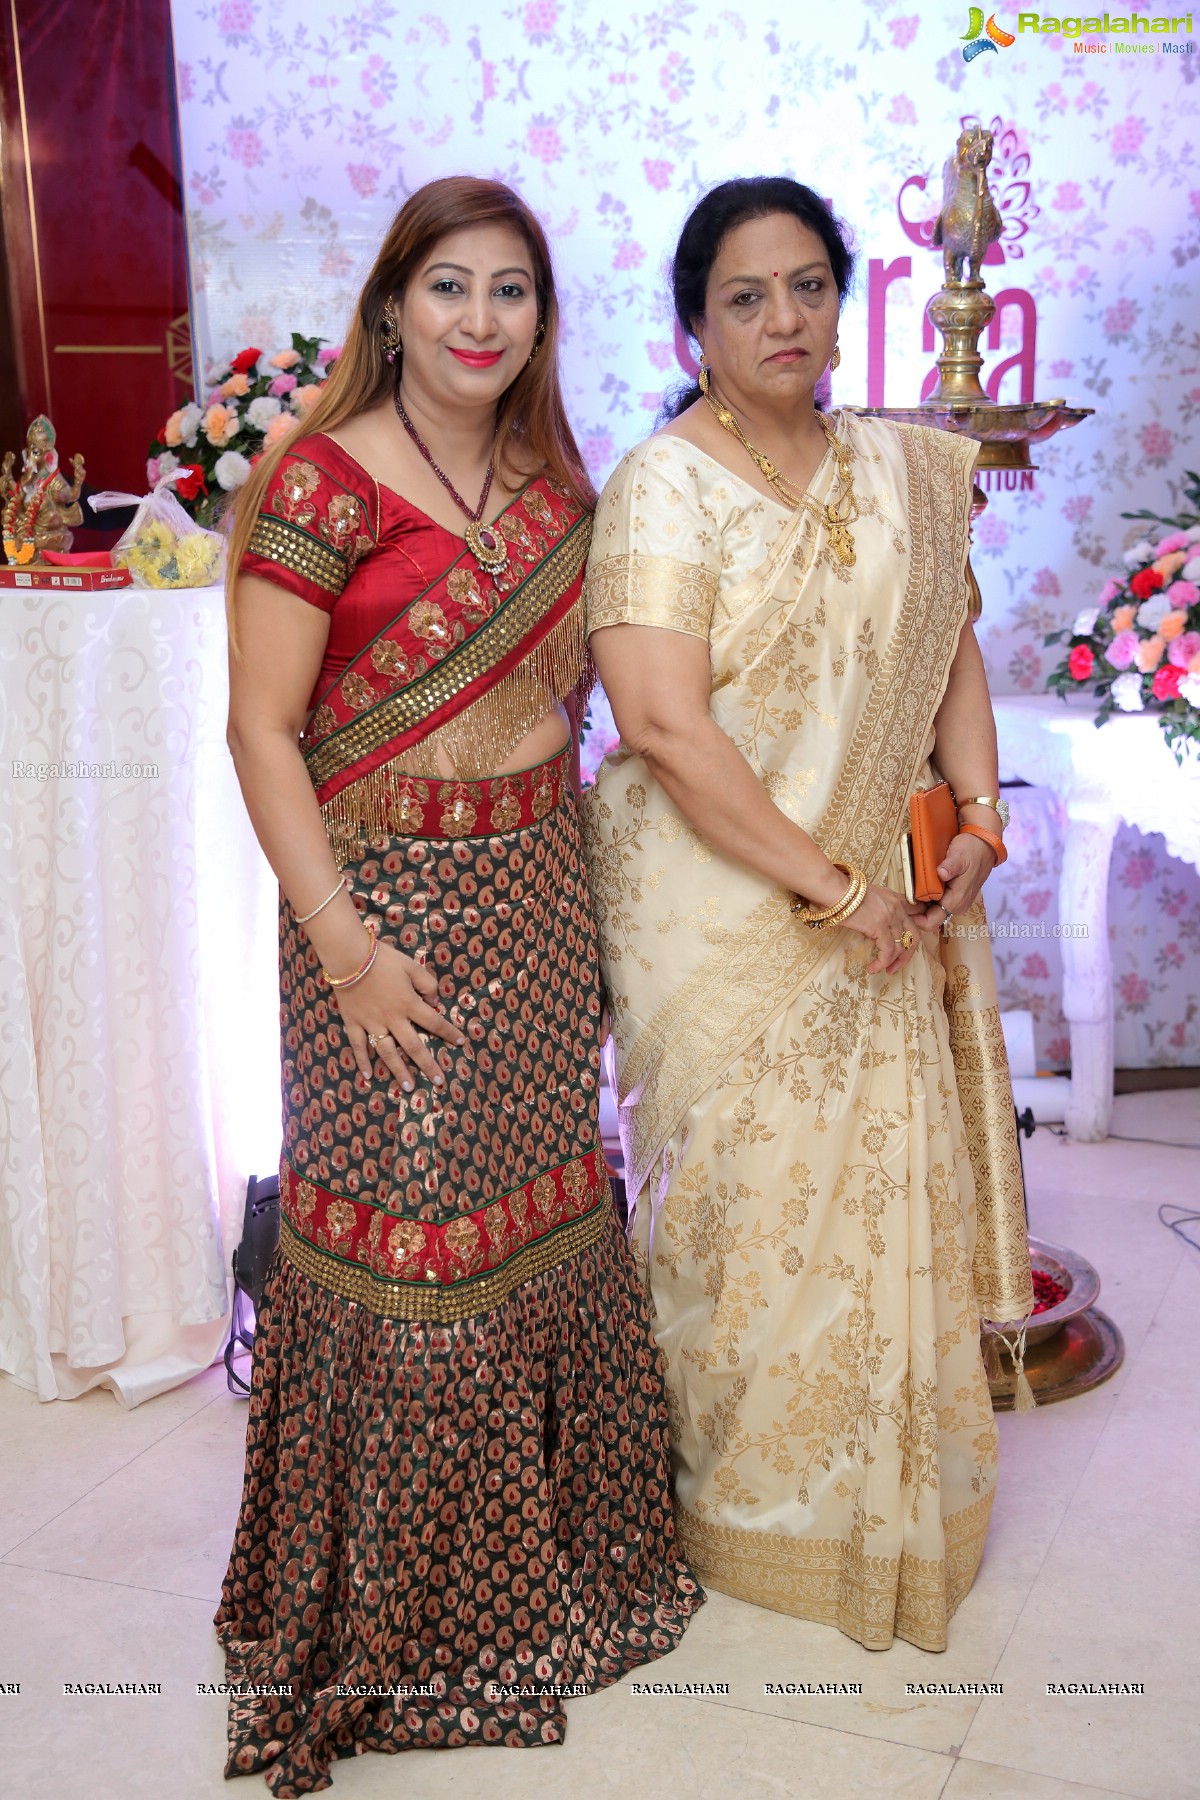 Sutraa Fashion and Lifestyle Exhibition - Wedding Edit Begins at Taj Krishna